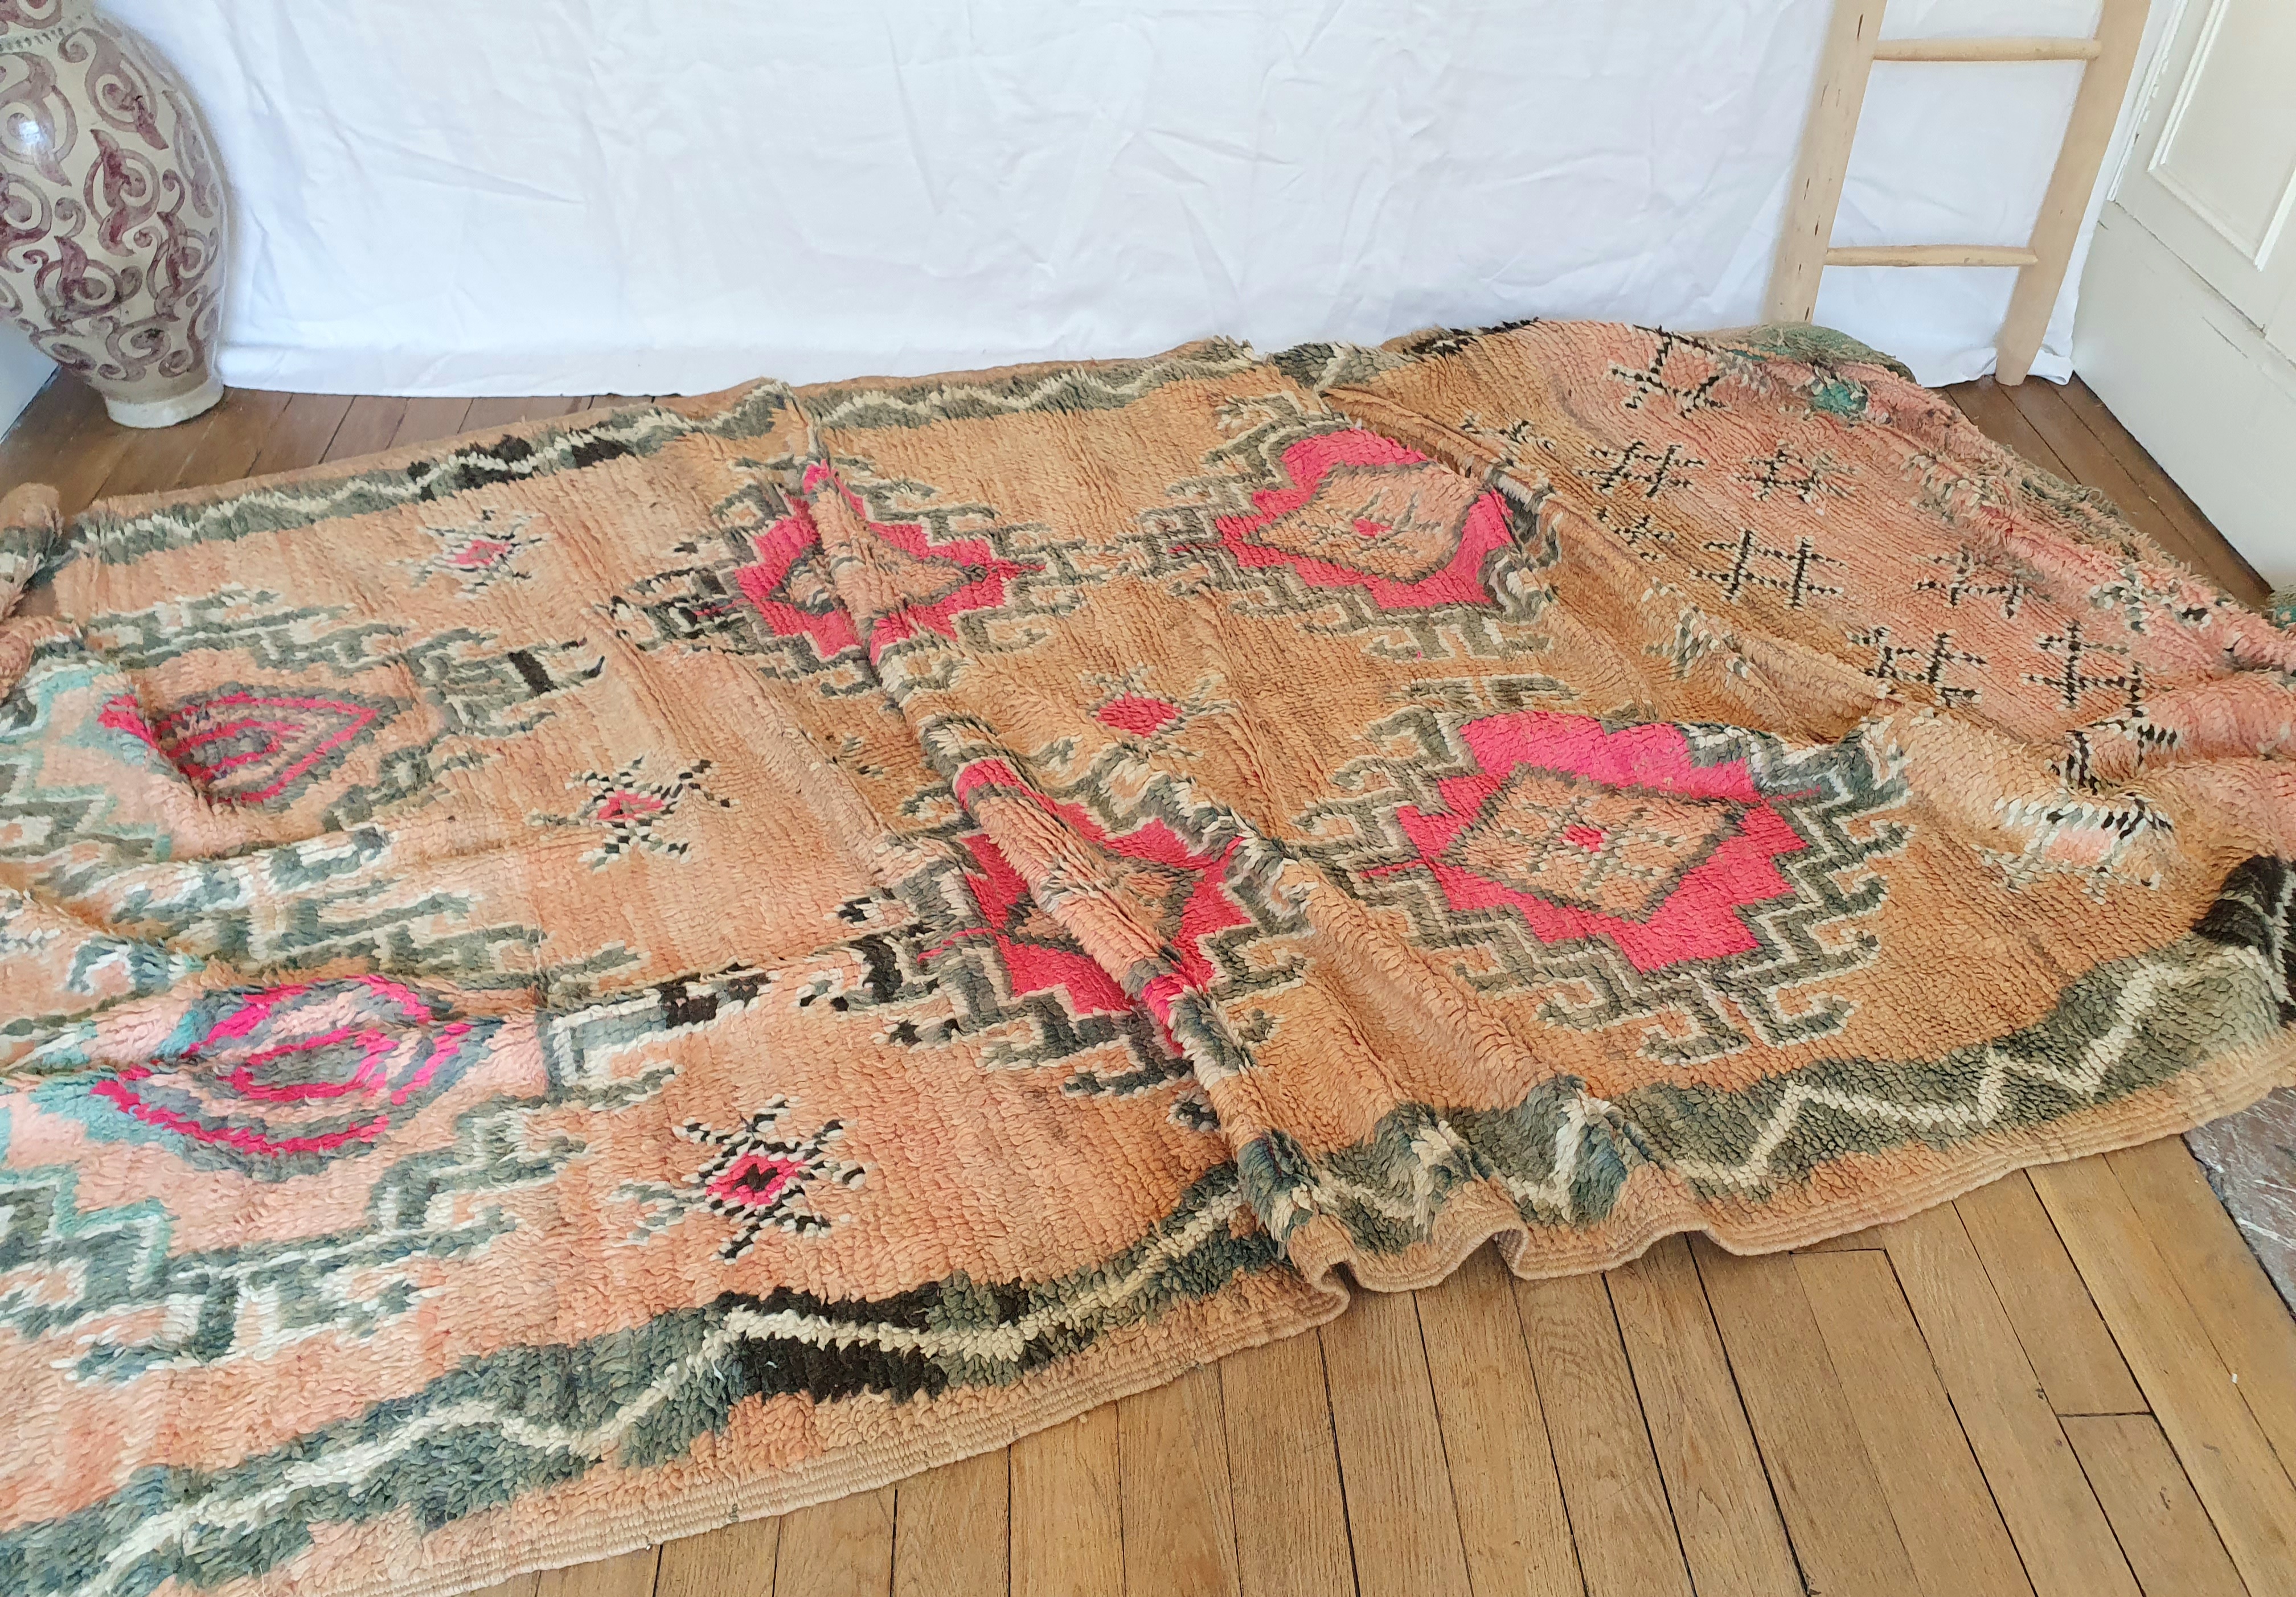 Vrai tapis berbère marocain ancien